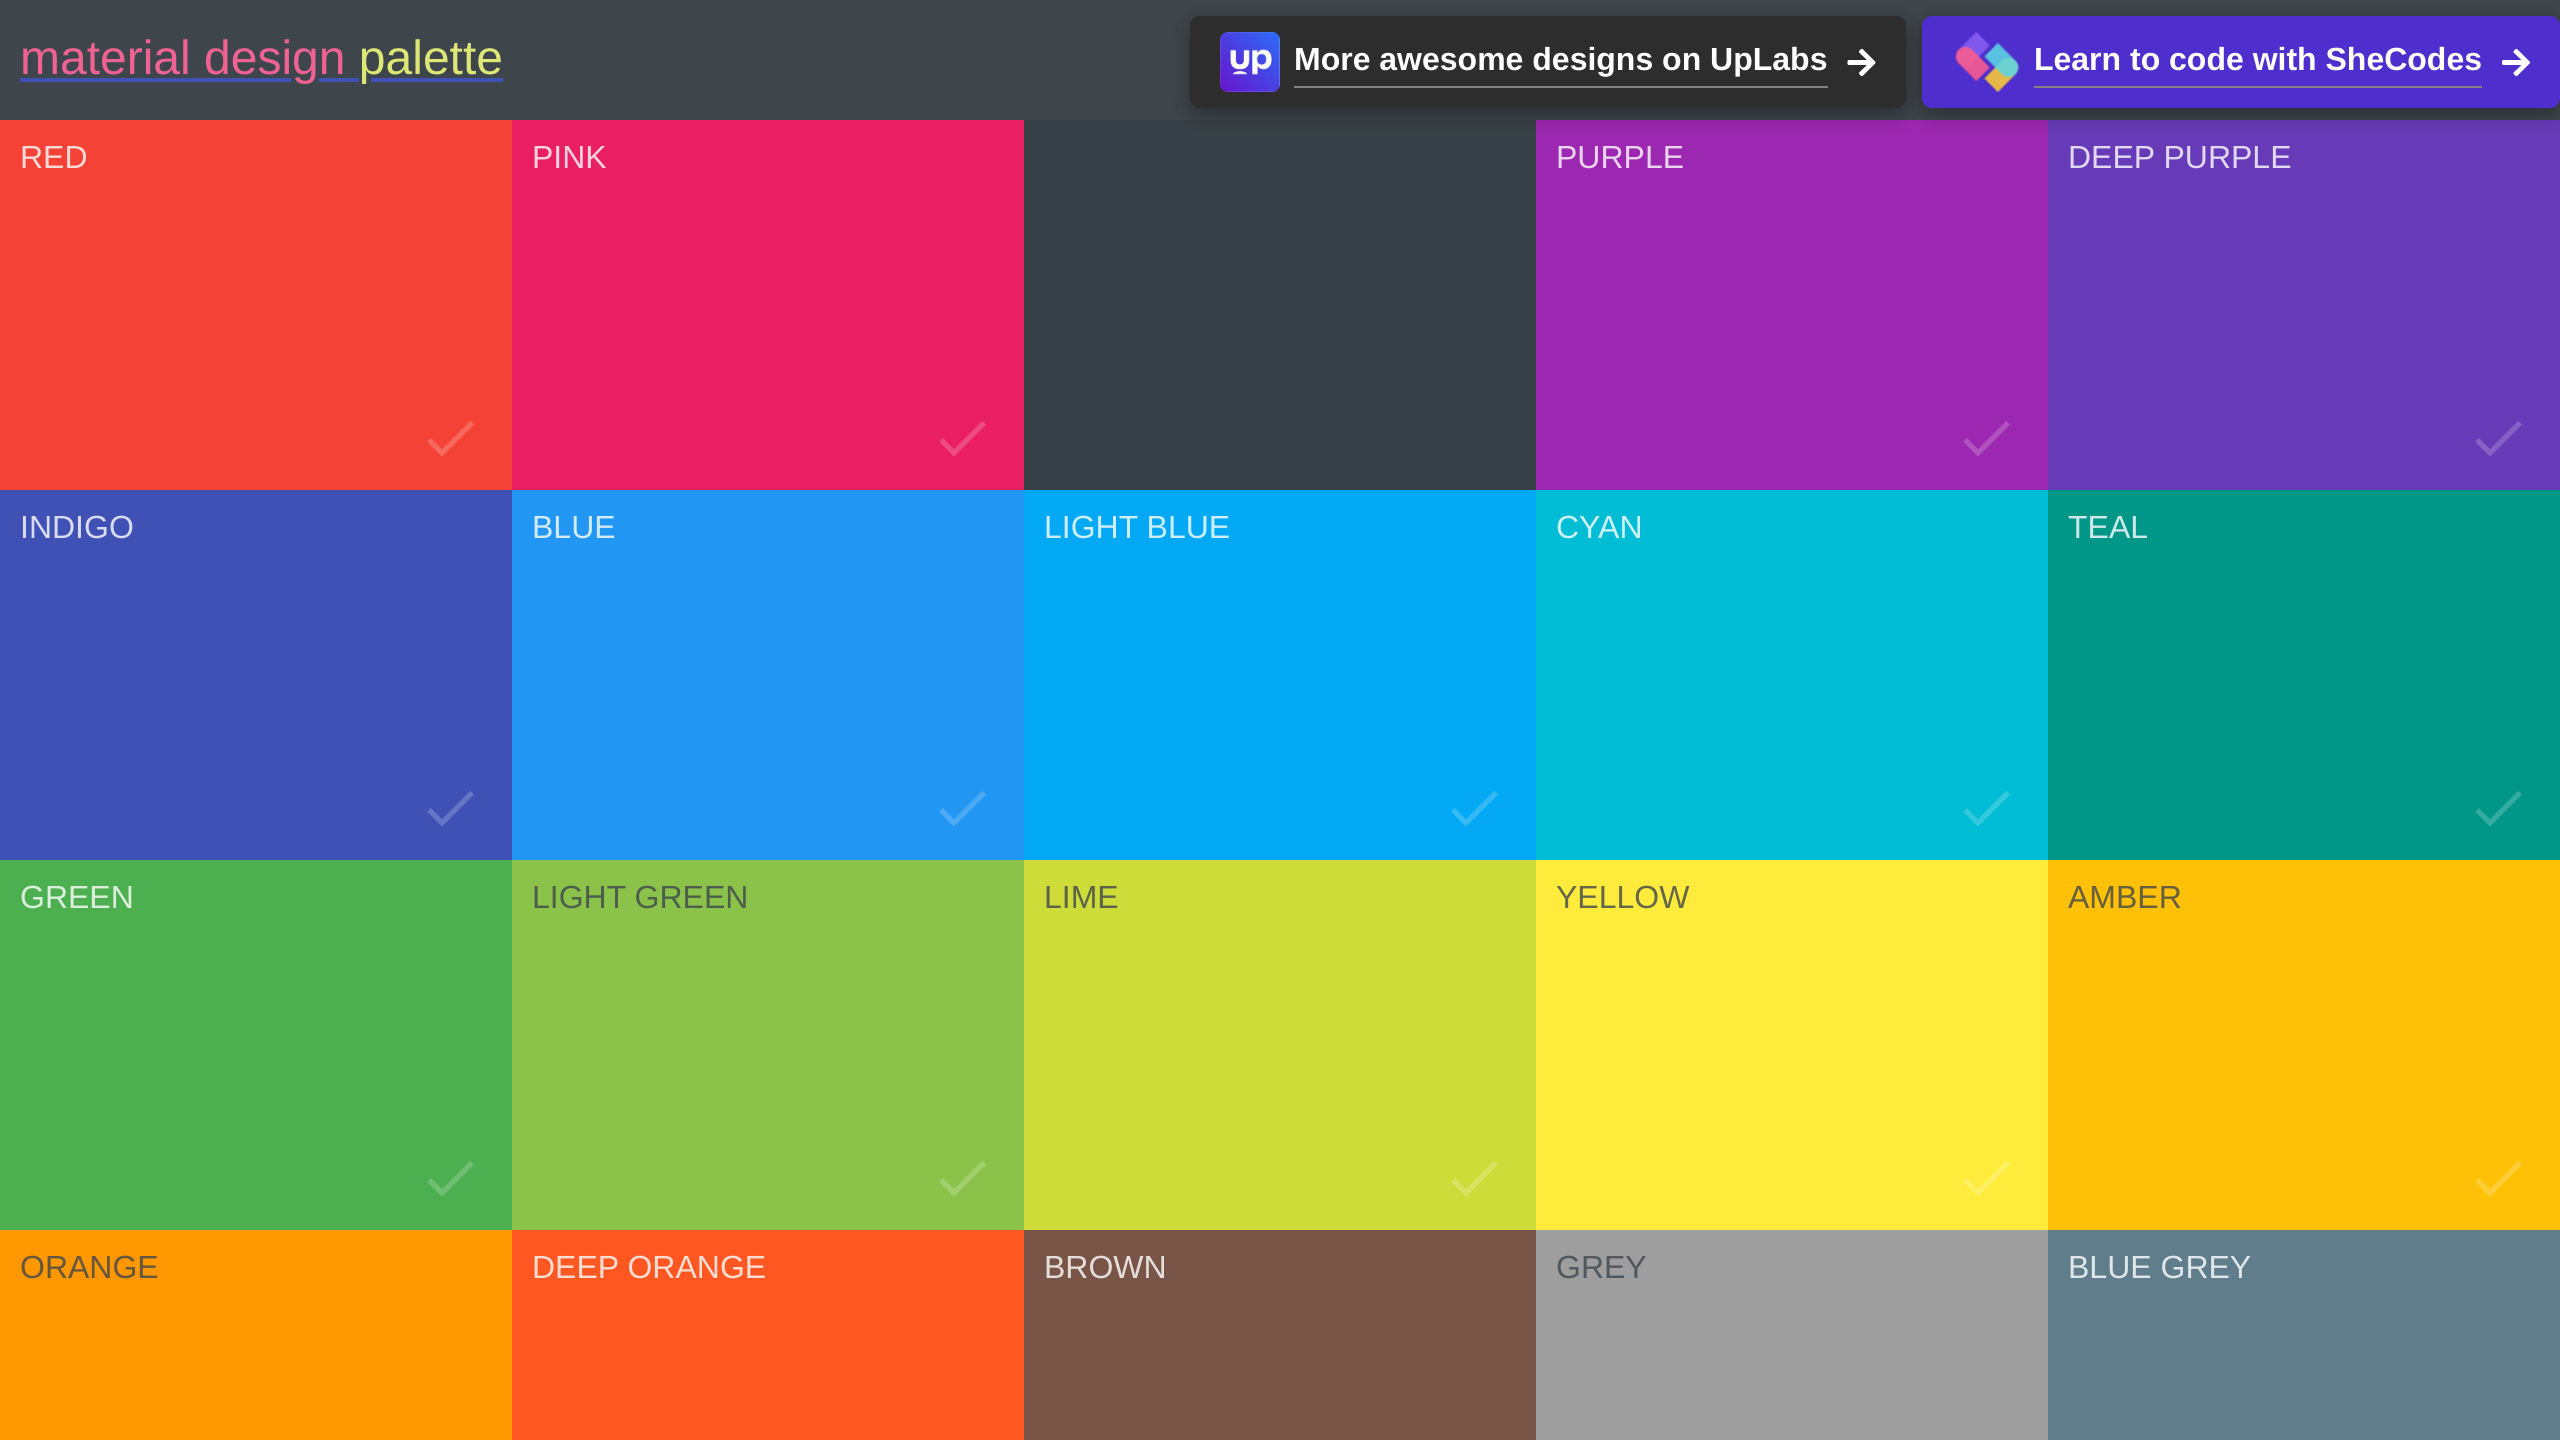 Material Design Palette's website screenshot